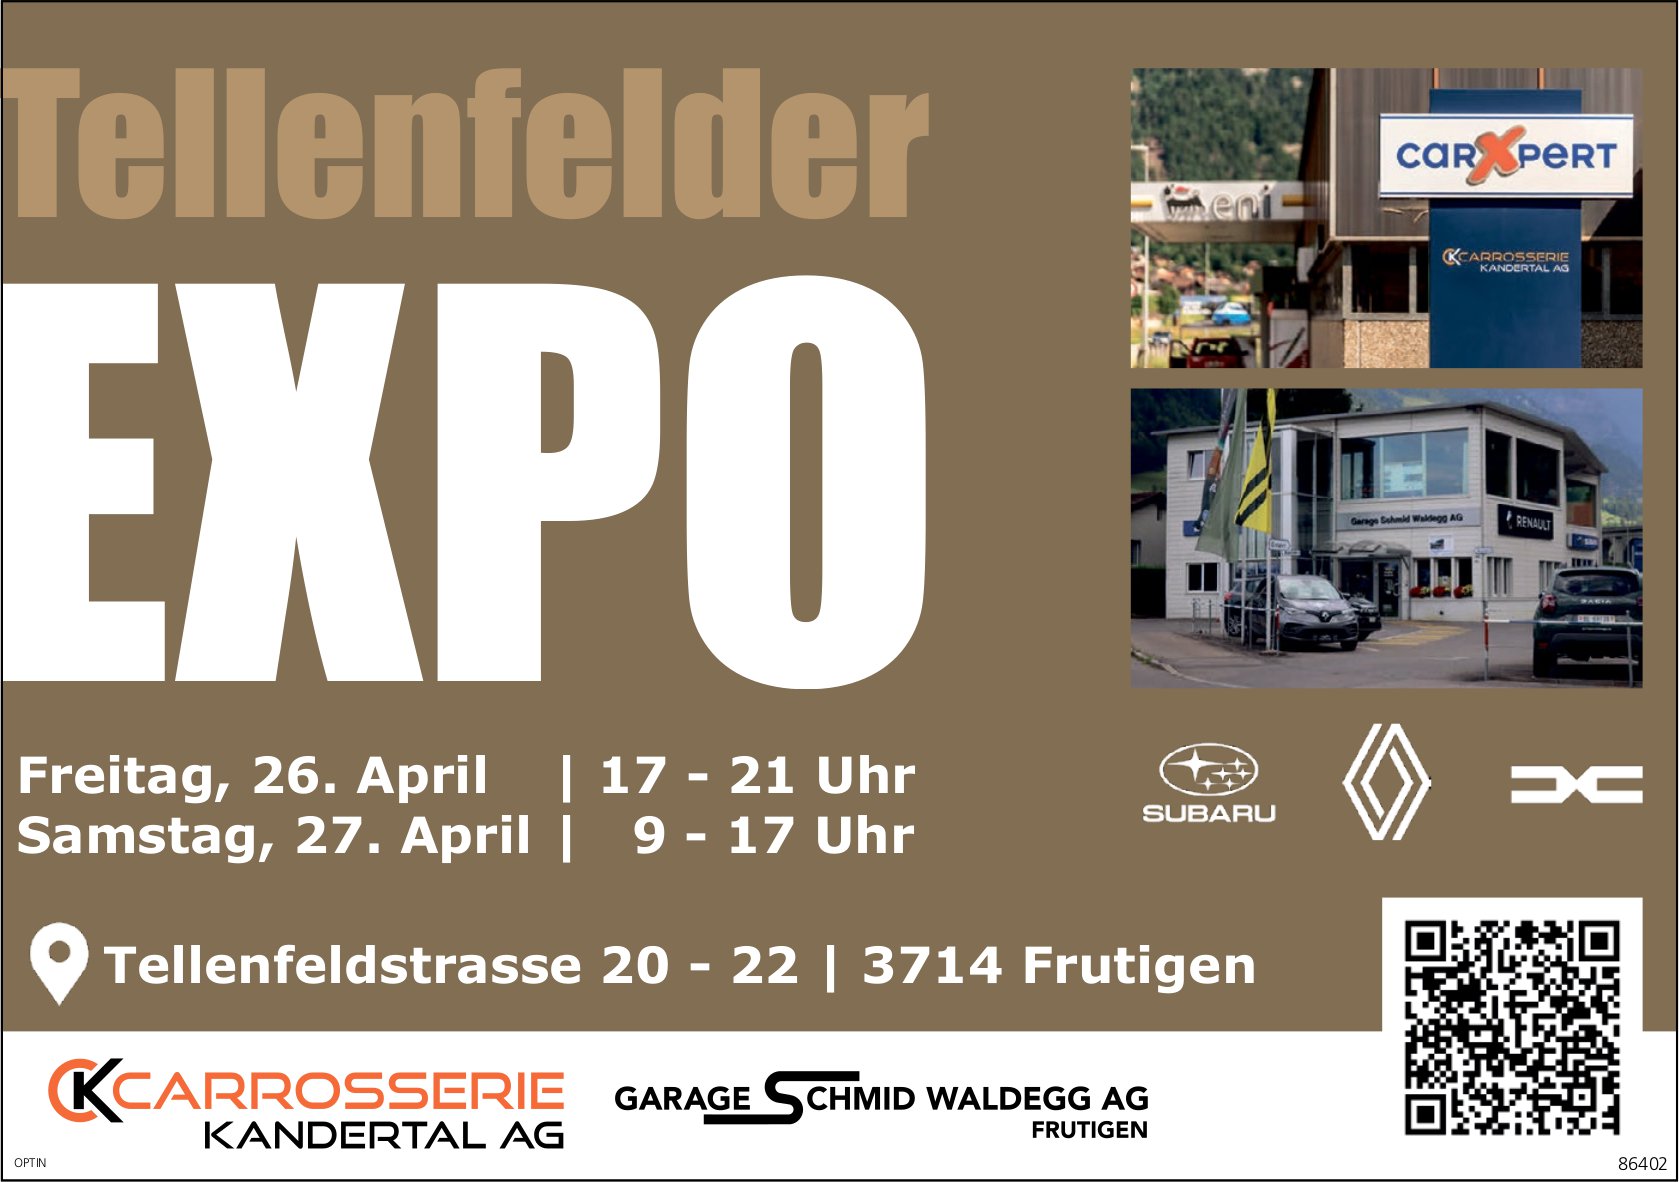 Tellenfelder EXPO, 26. und 27. April, Tellenfeldstrasse 20-22, Frutigen